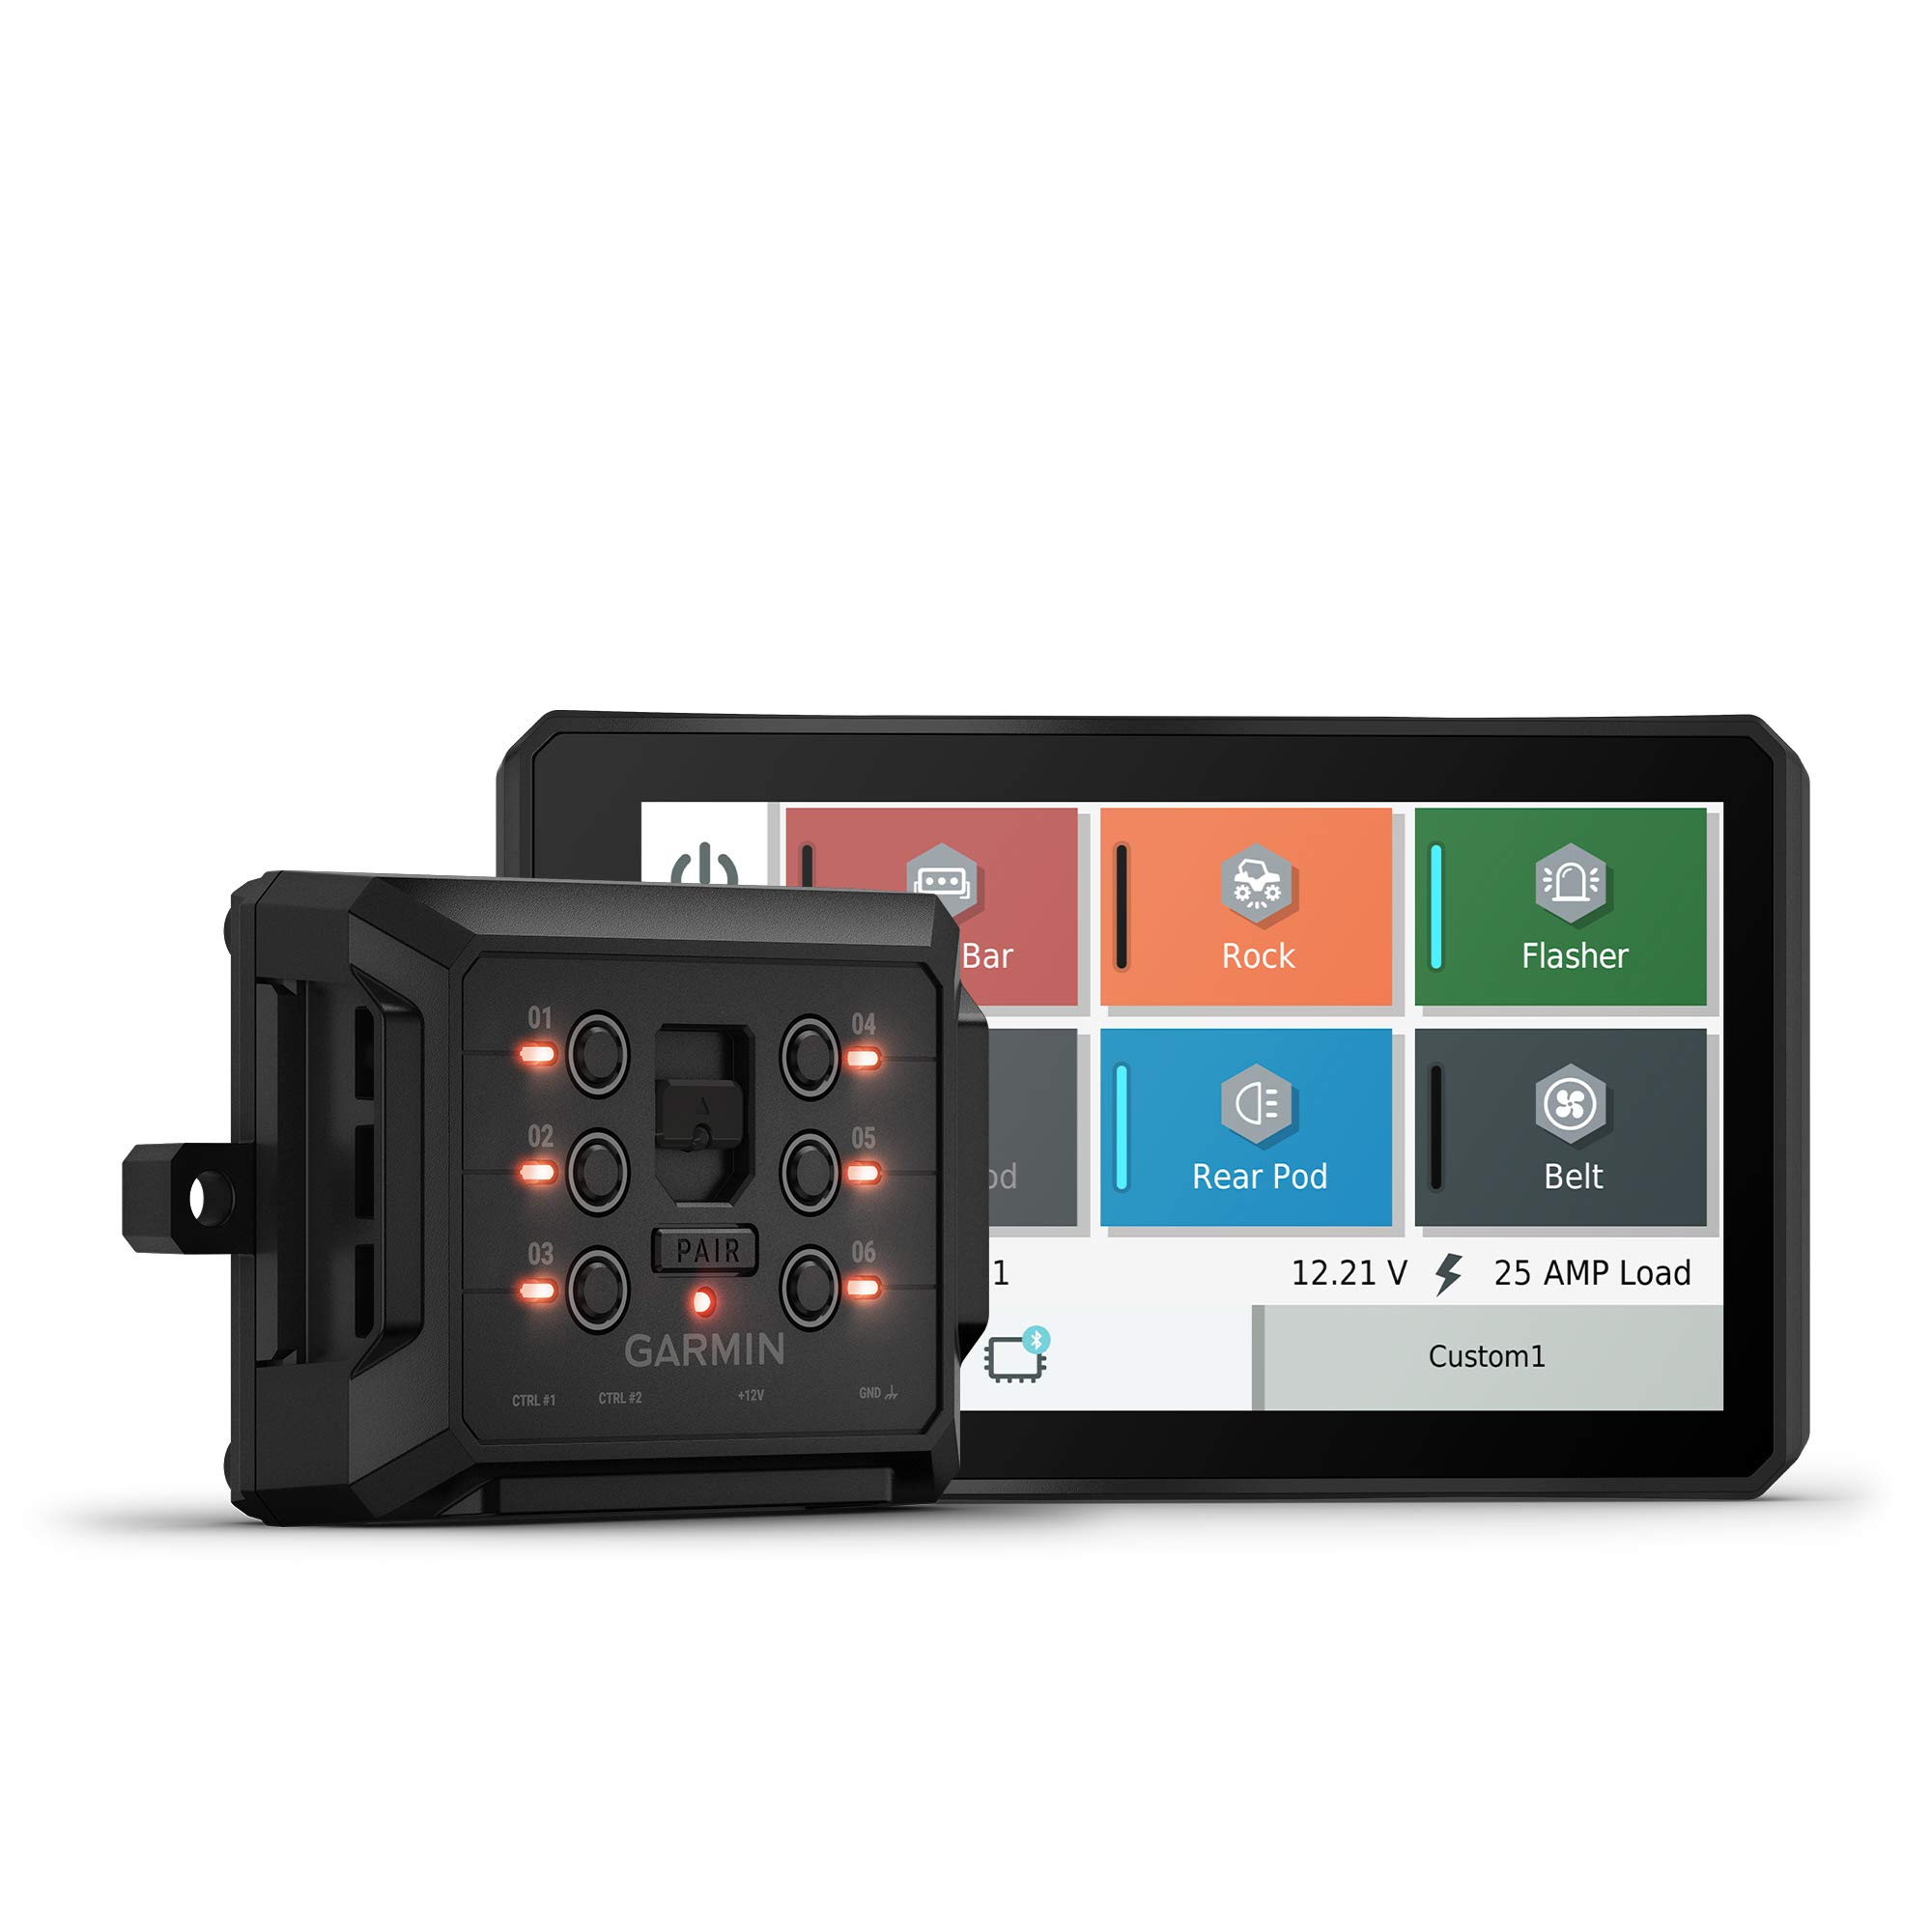 Garmin PowerSwitch, 6 Gang Compact Digital Switch Box, Requires Compatible Garmin Navigator or Smartphone, Switch Panel for Car SUV UTV ATV Caravan Boat Marine